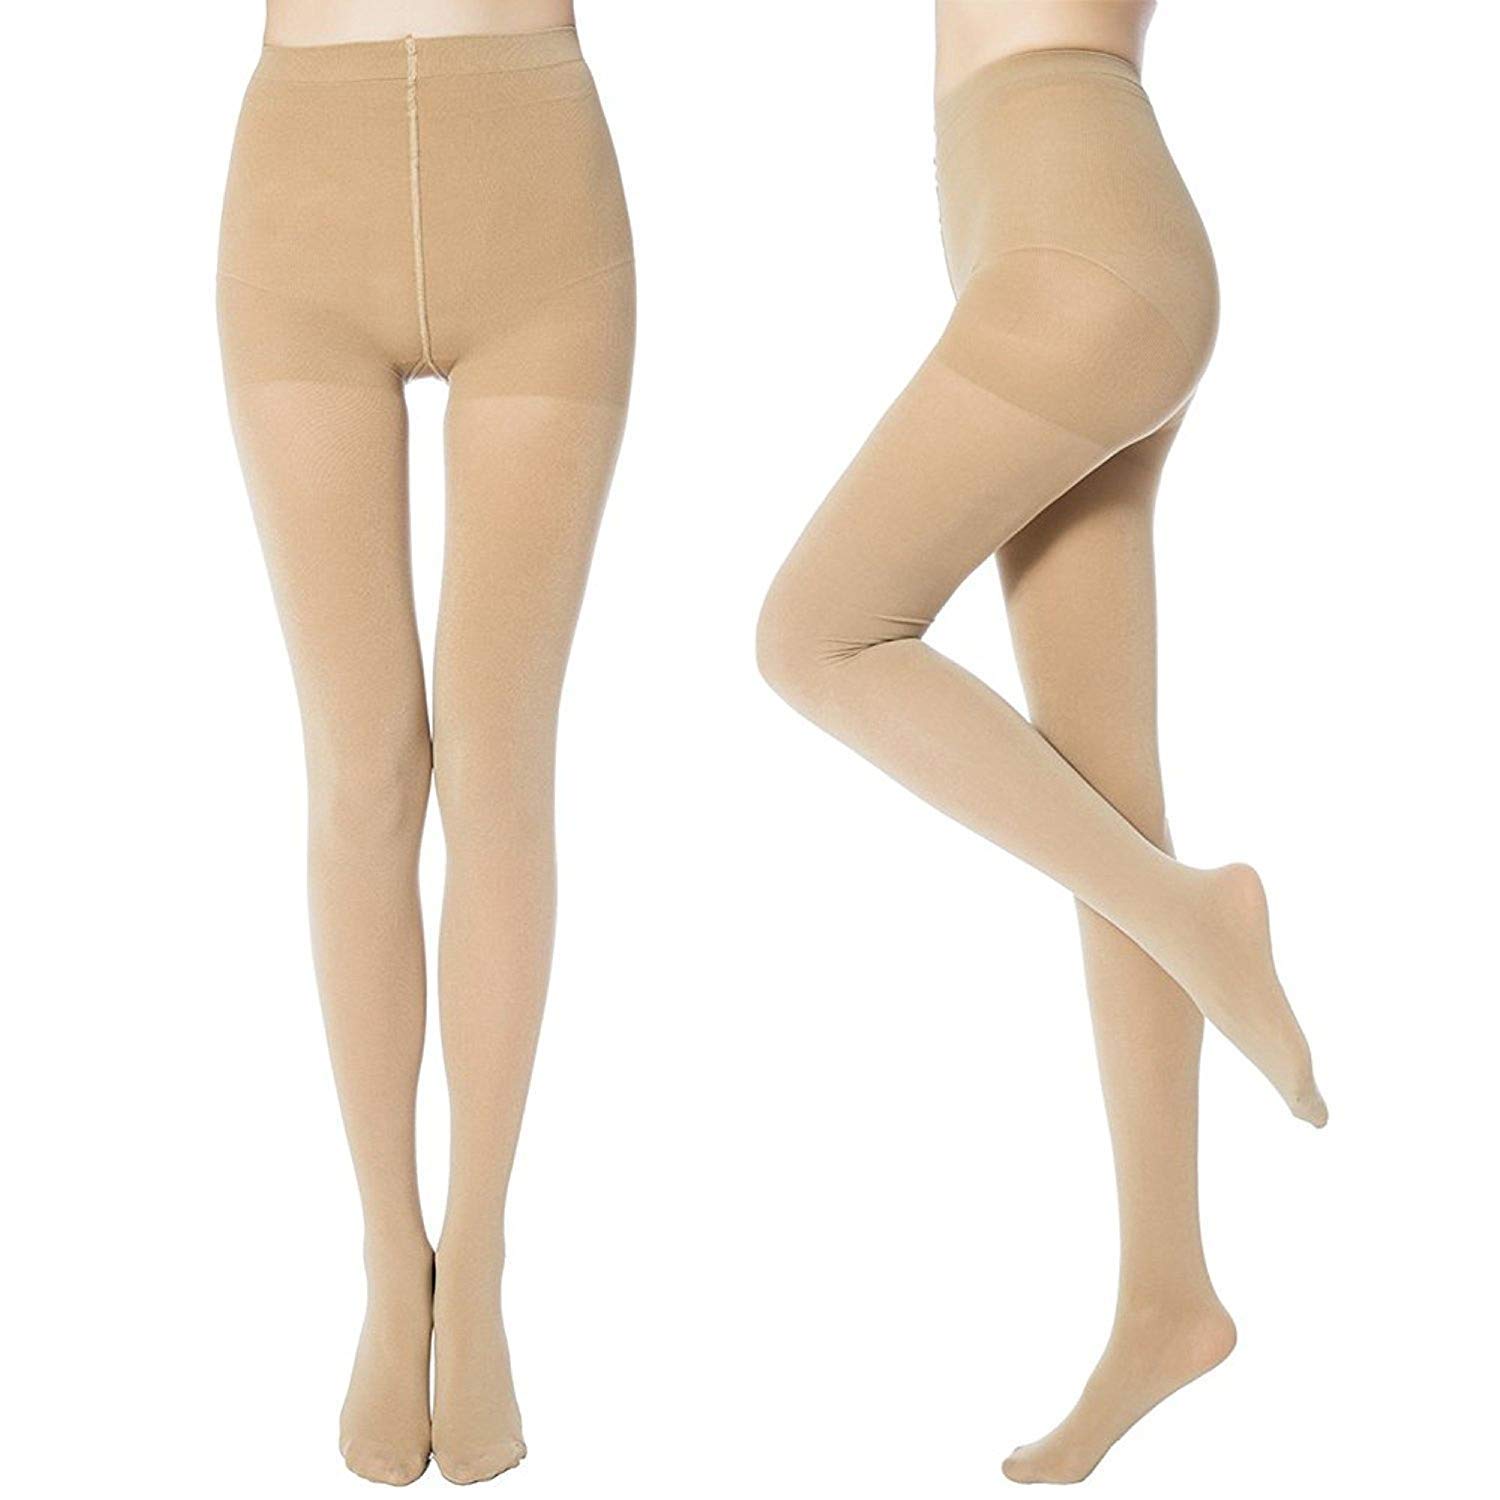 INFISPACE® Women & Girl's Full Length High Waisted Pantyhose Stockings (Pack of 2)